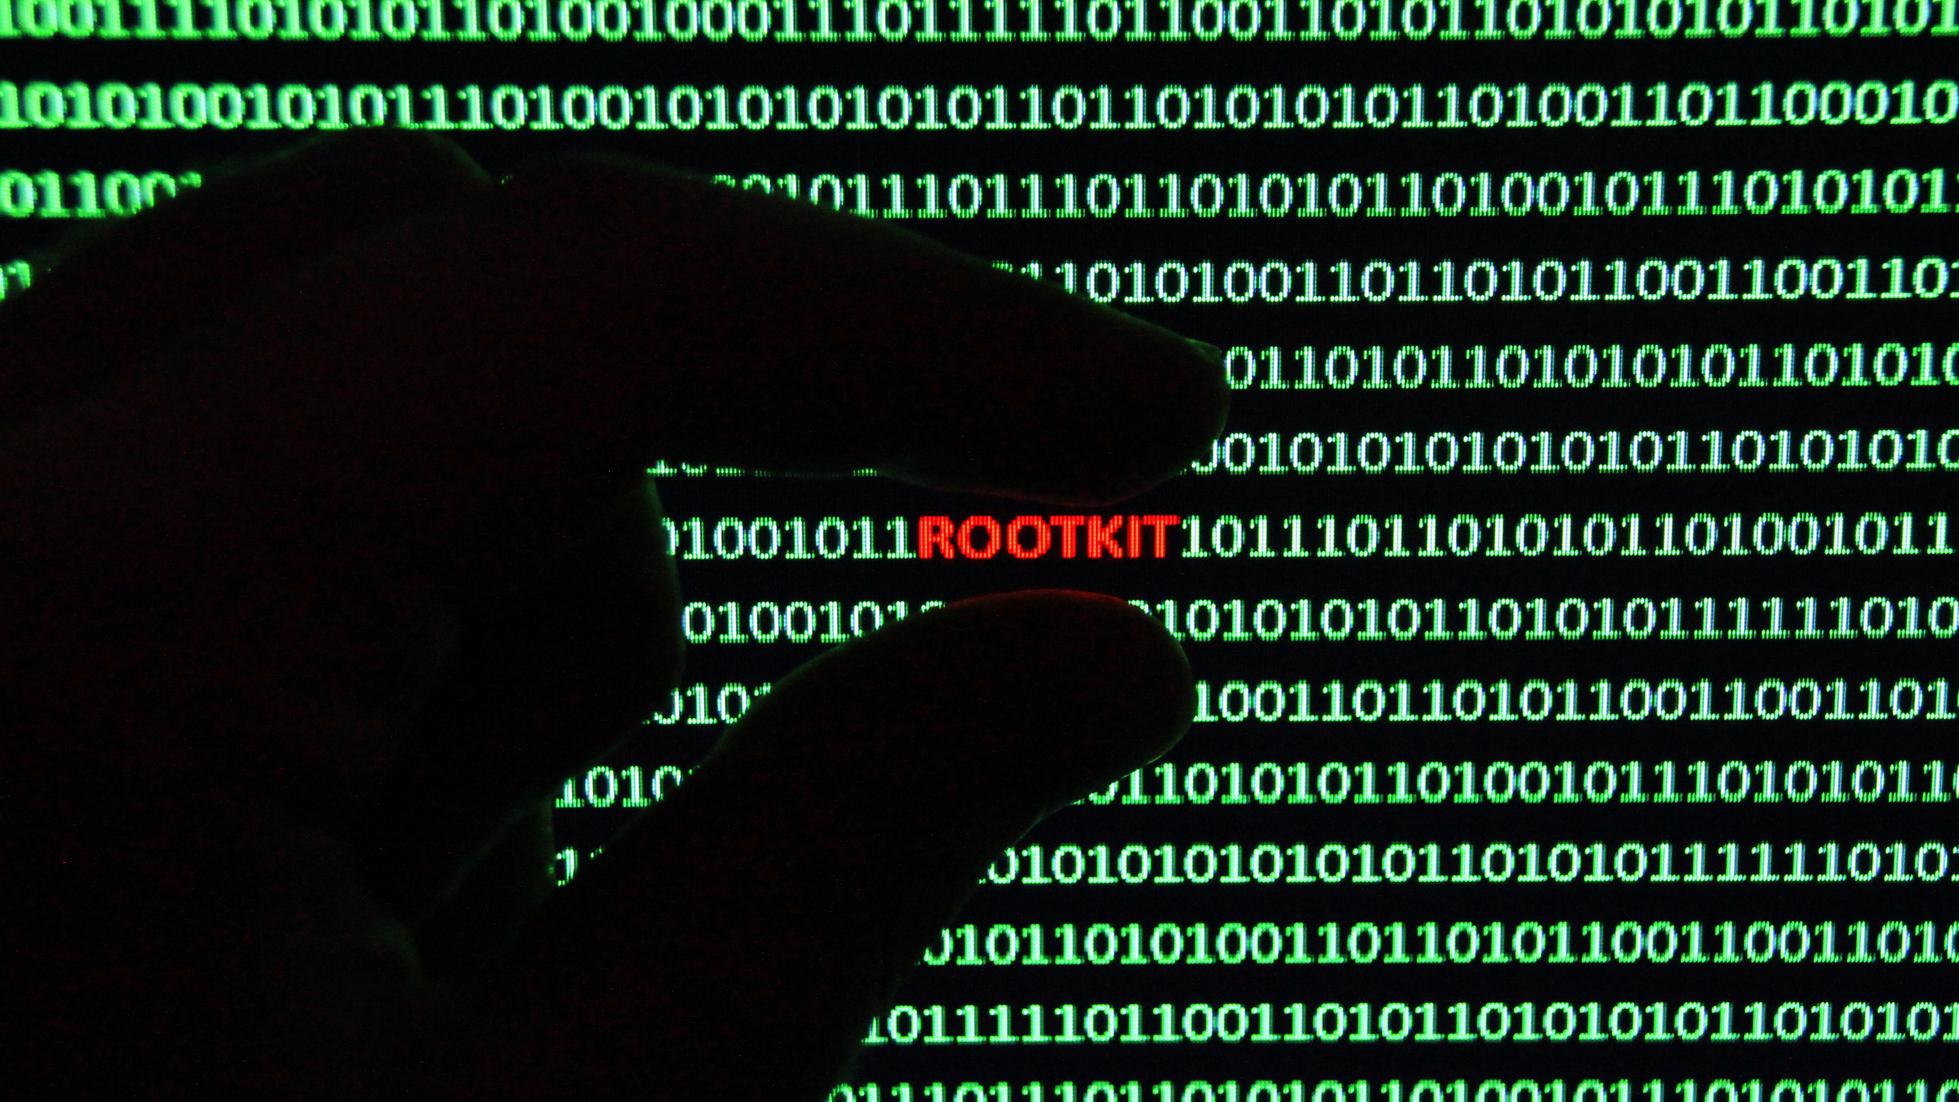 rootkit-istock-02-100803219-orig.jpg